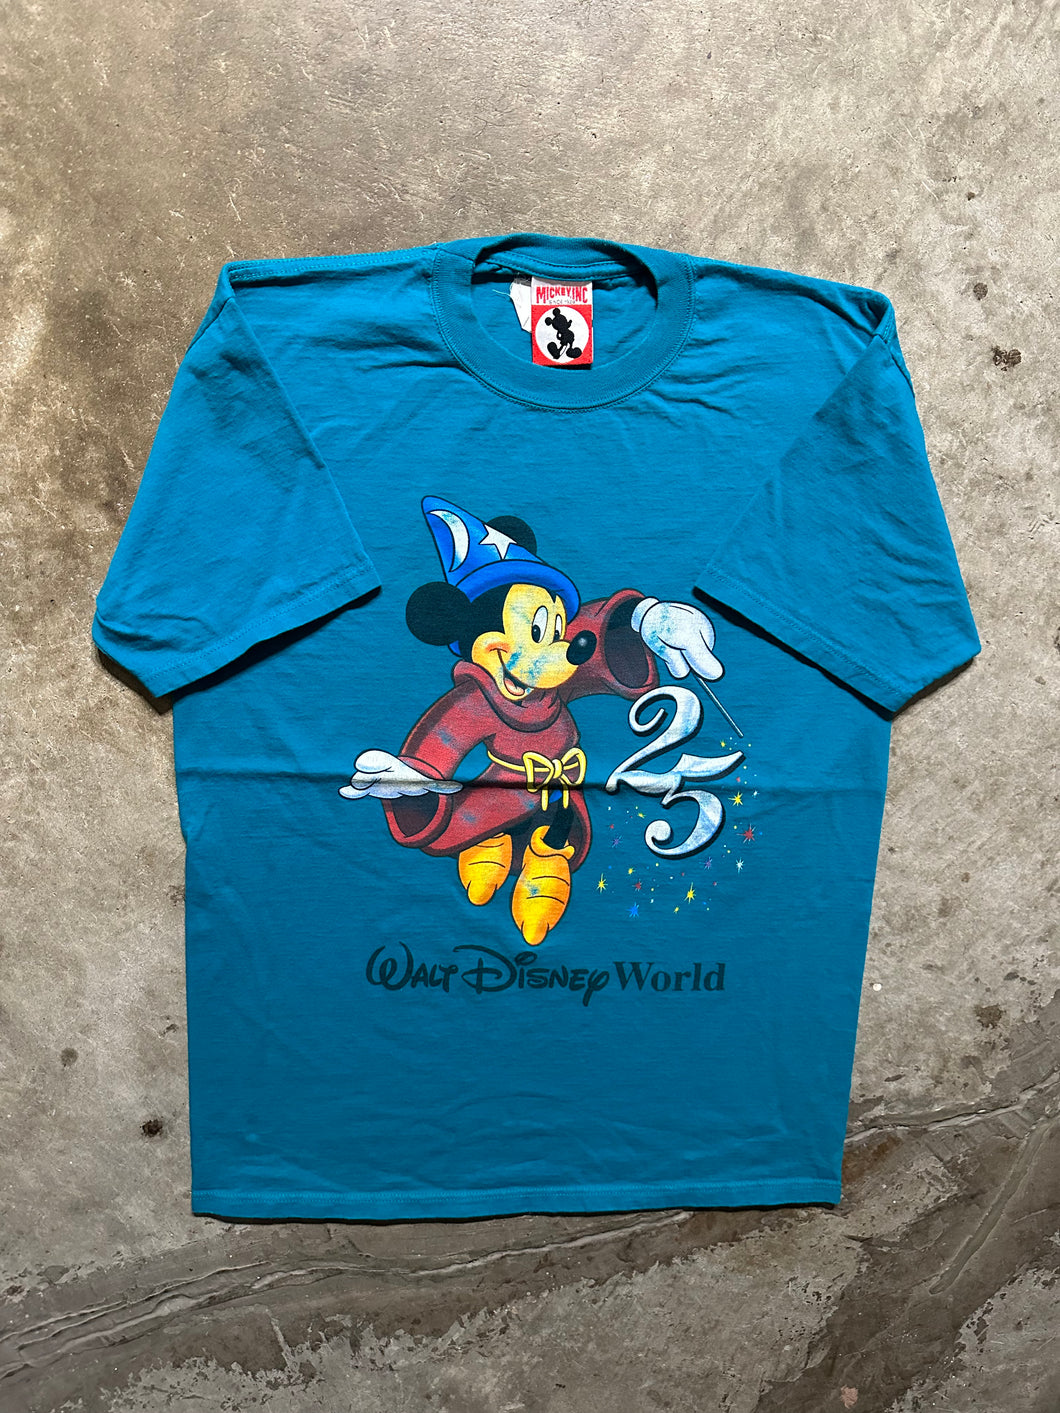 Vintage Walt Disney World 1990s Teal Tee Shirt (Large)